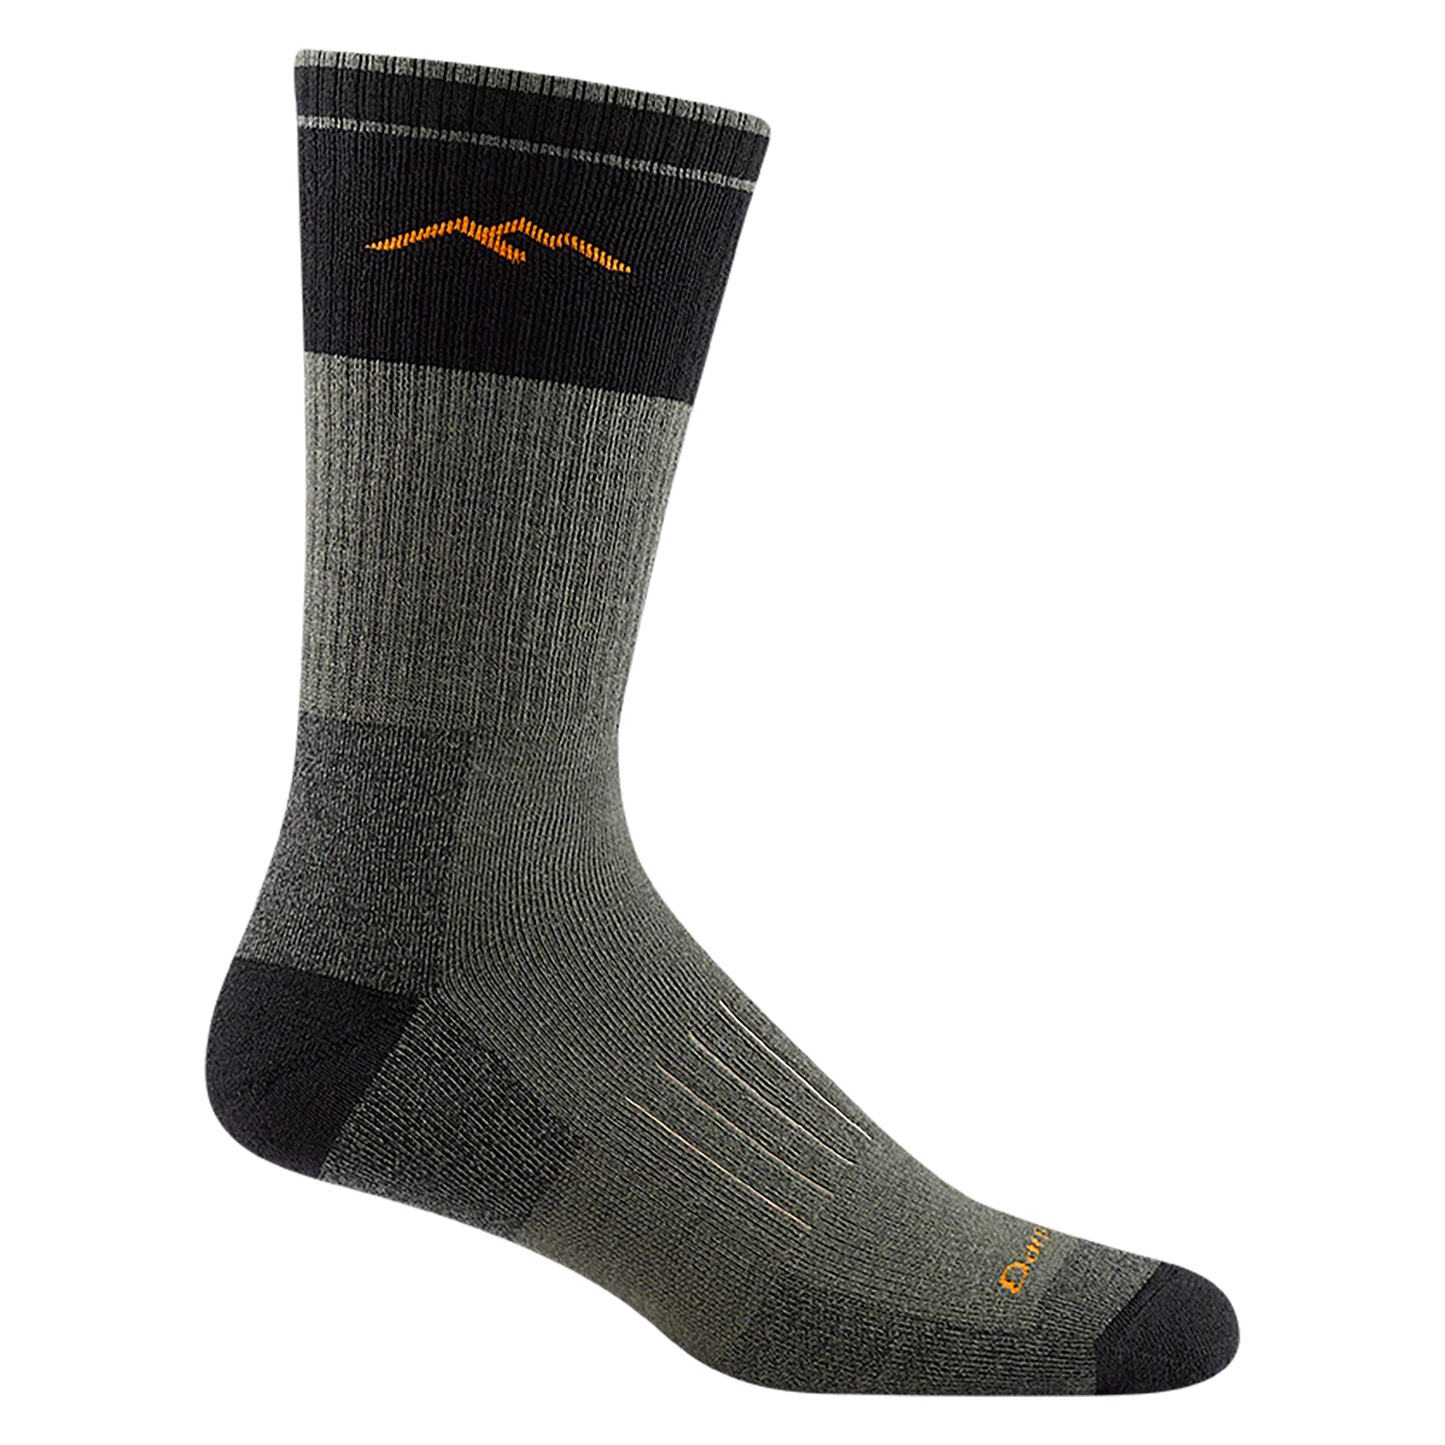 Darn Tough Hunter Boot Sock, gray with black heel & toe and orange mountain range design on top, side view